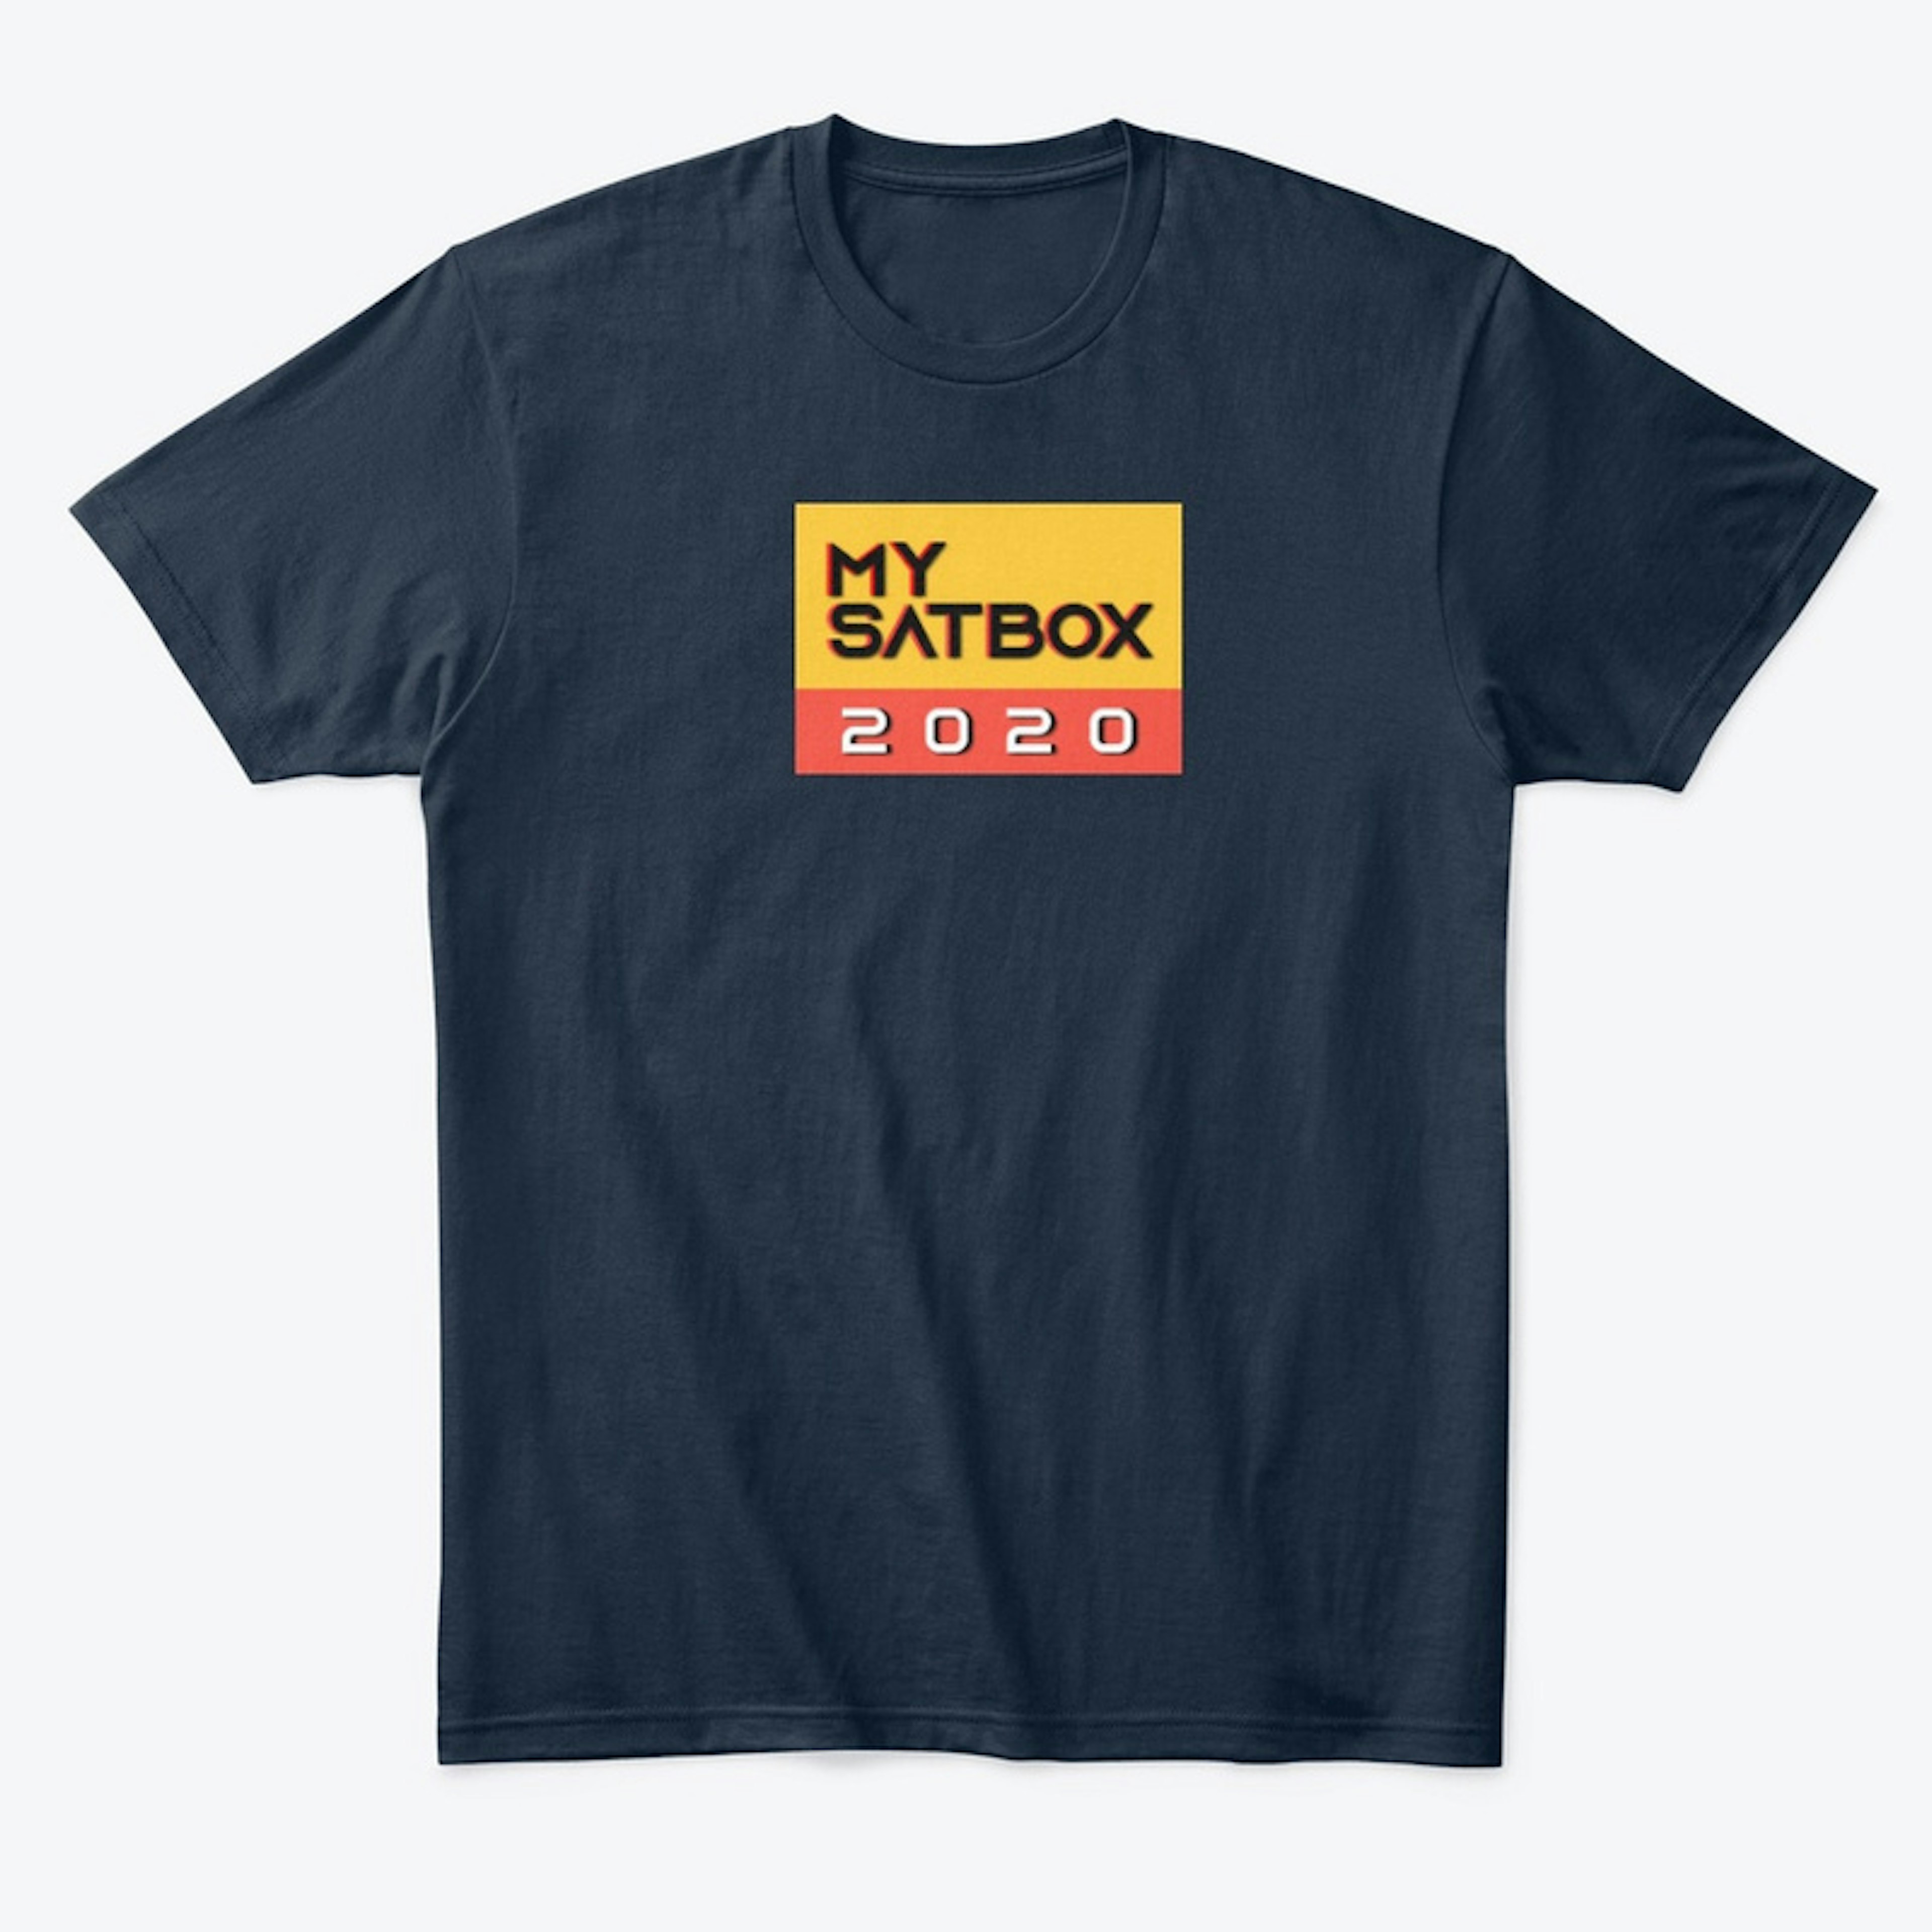 mySATBOX.TV T-shirt Collection.